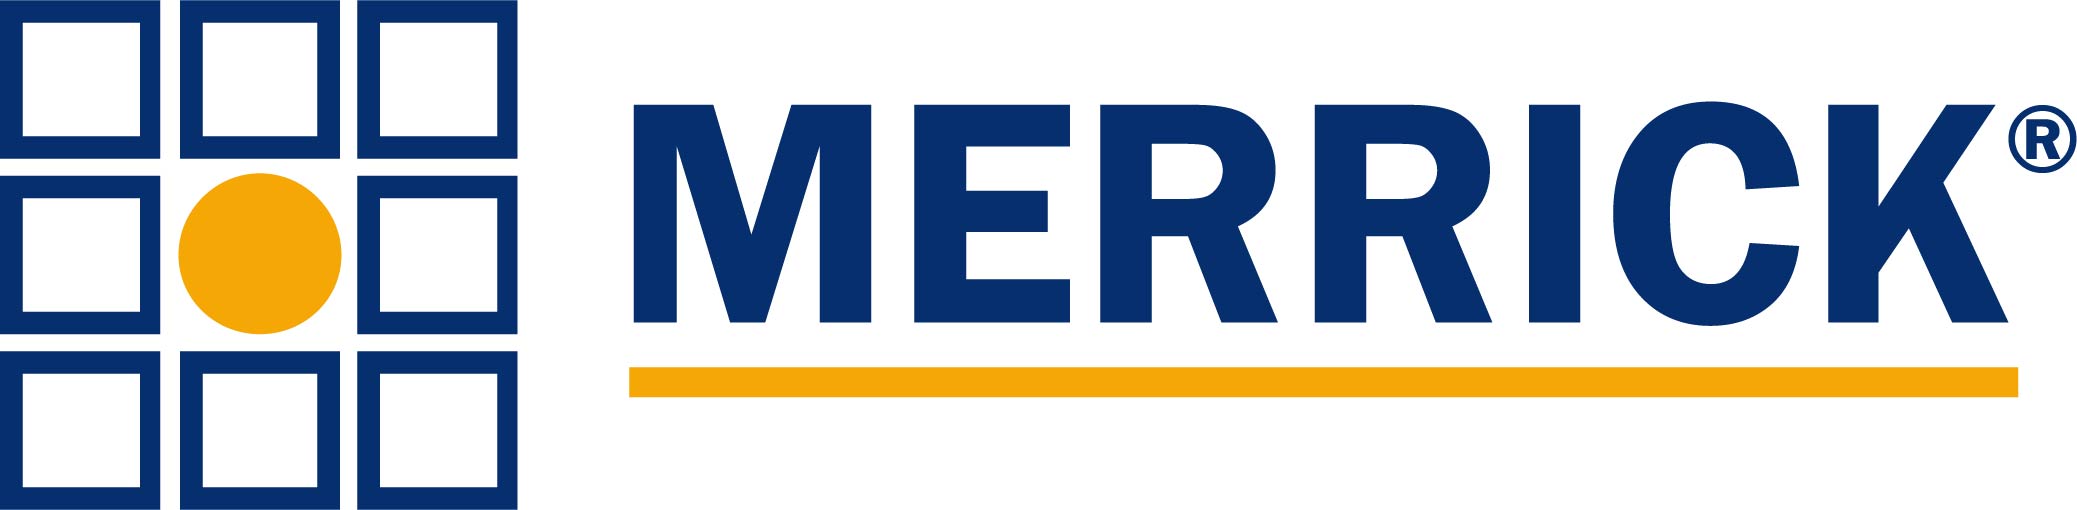 merrick logo (1)